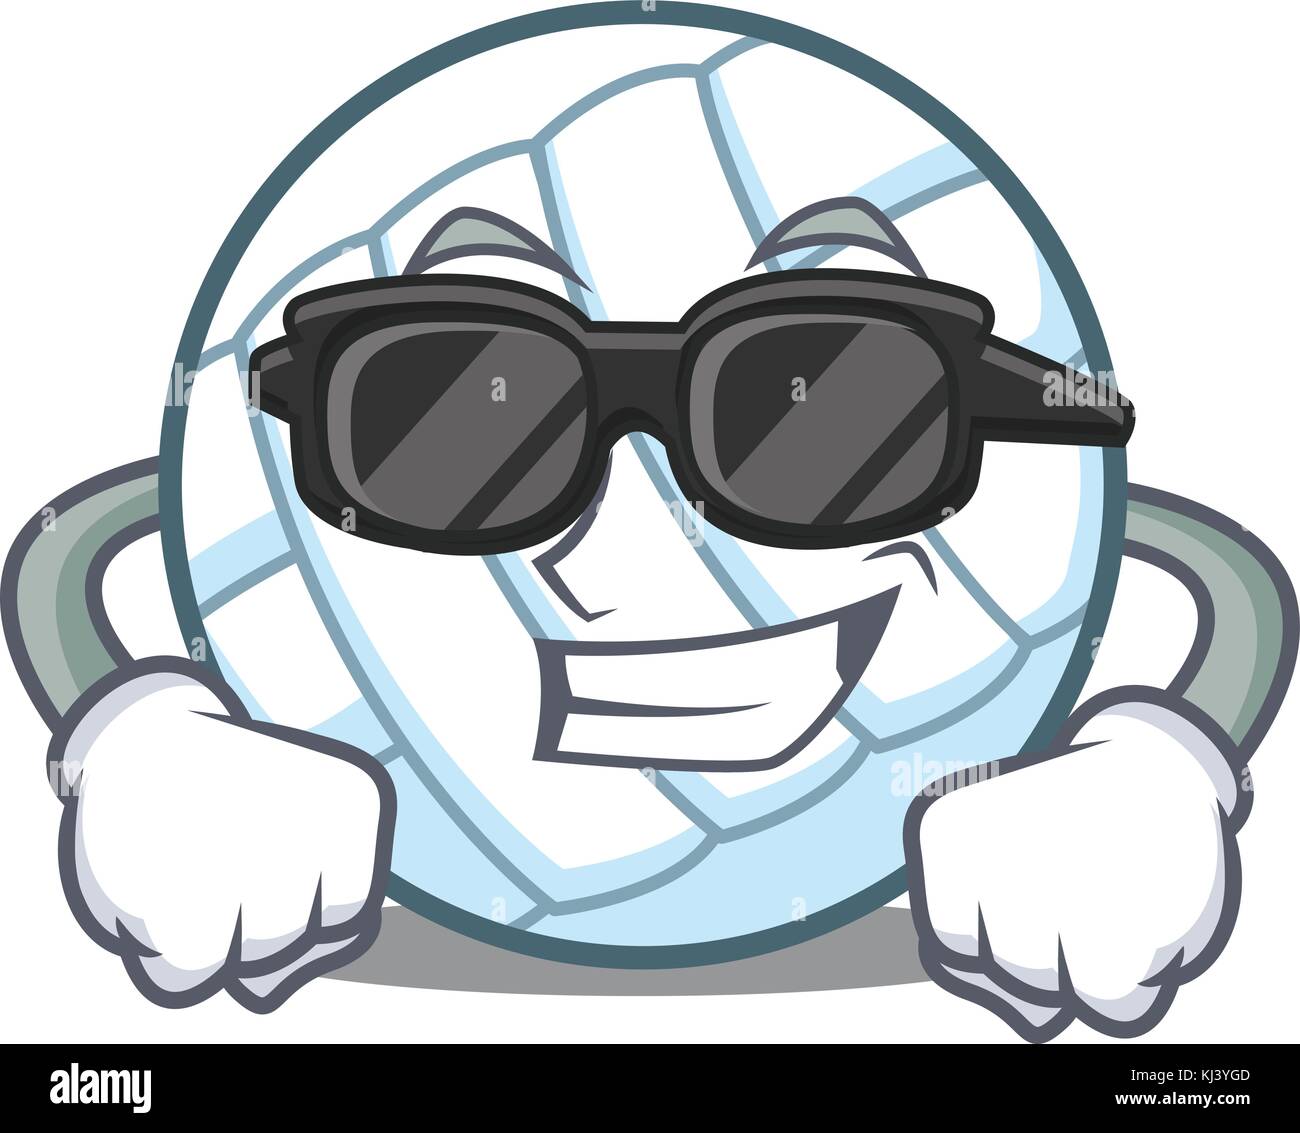 Super cool volley ball character cartoon Stock Vector Image & Art - Alamy